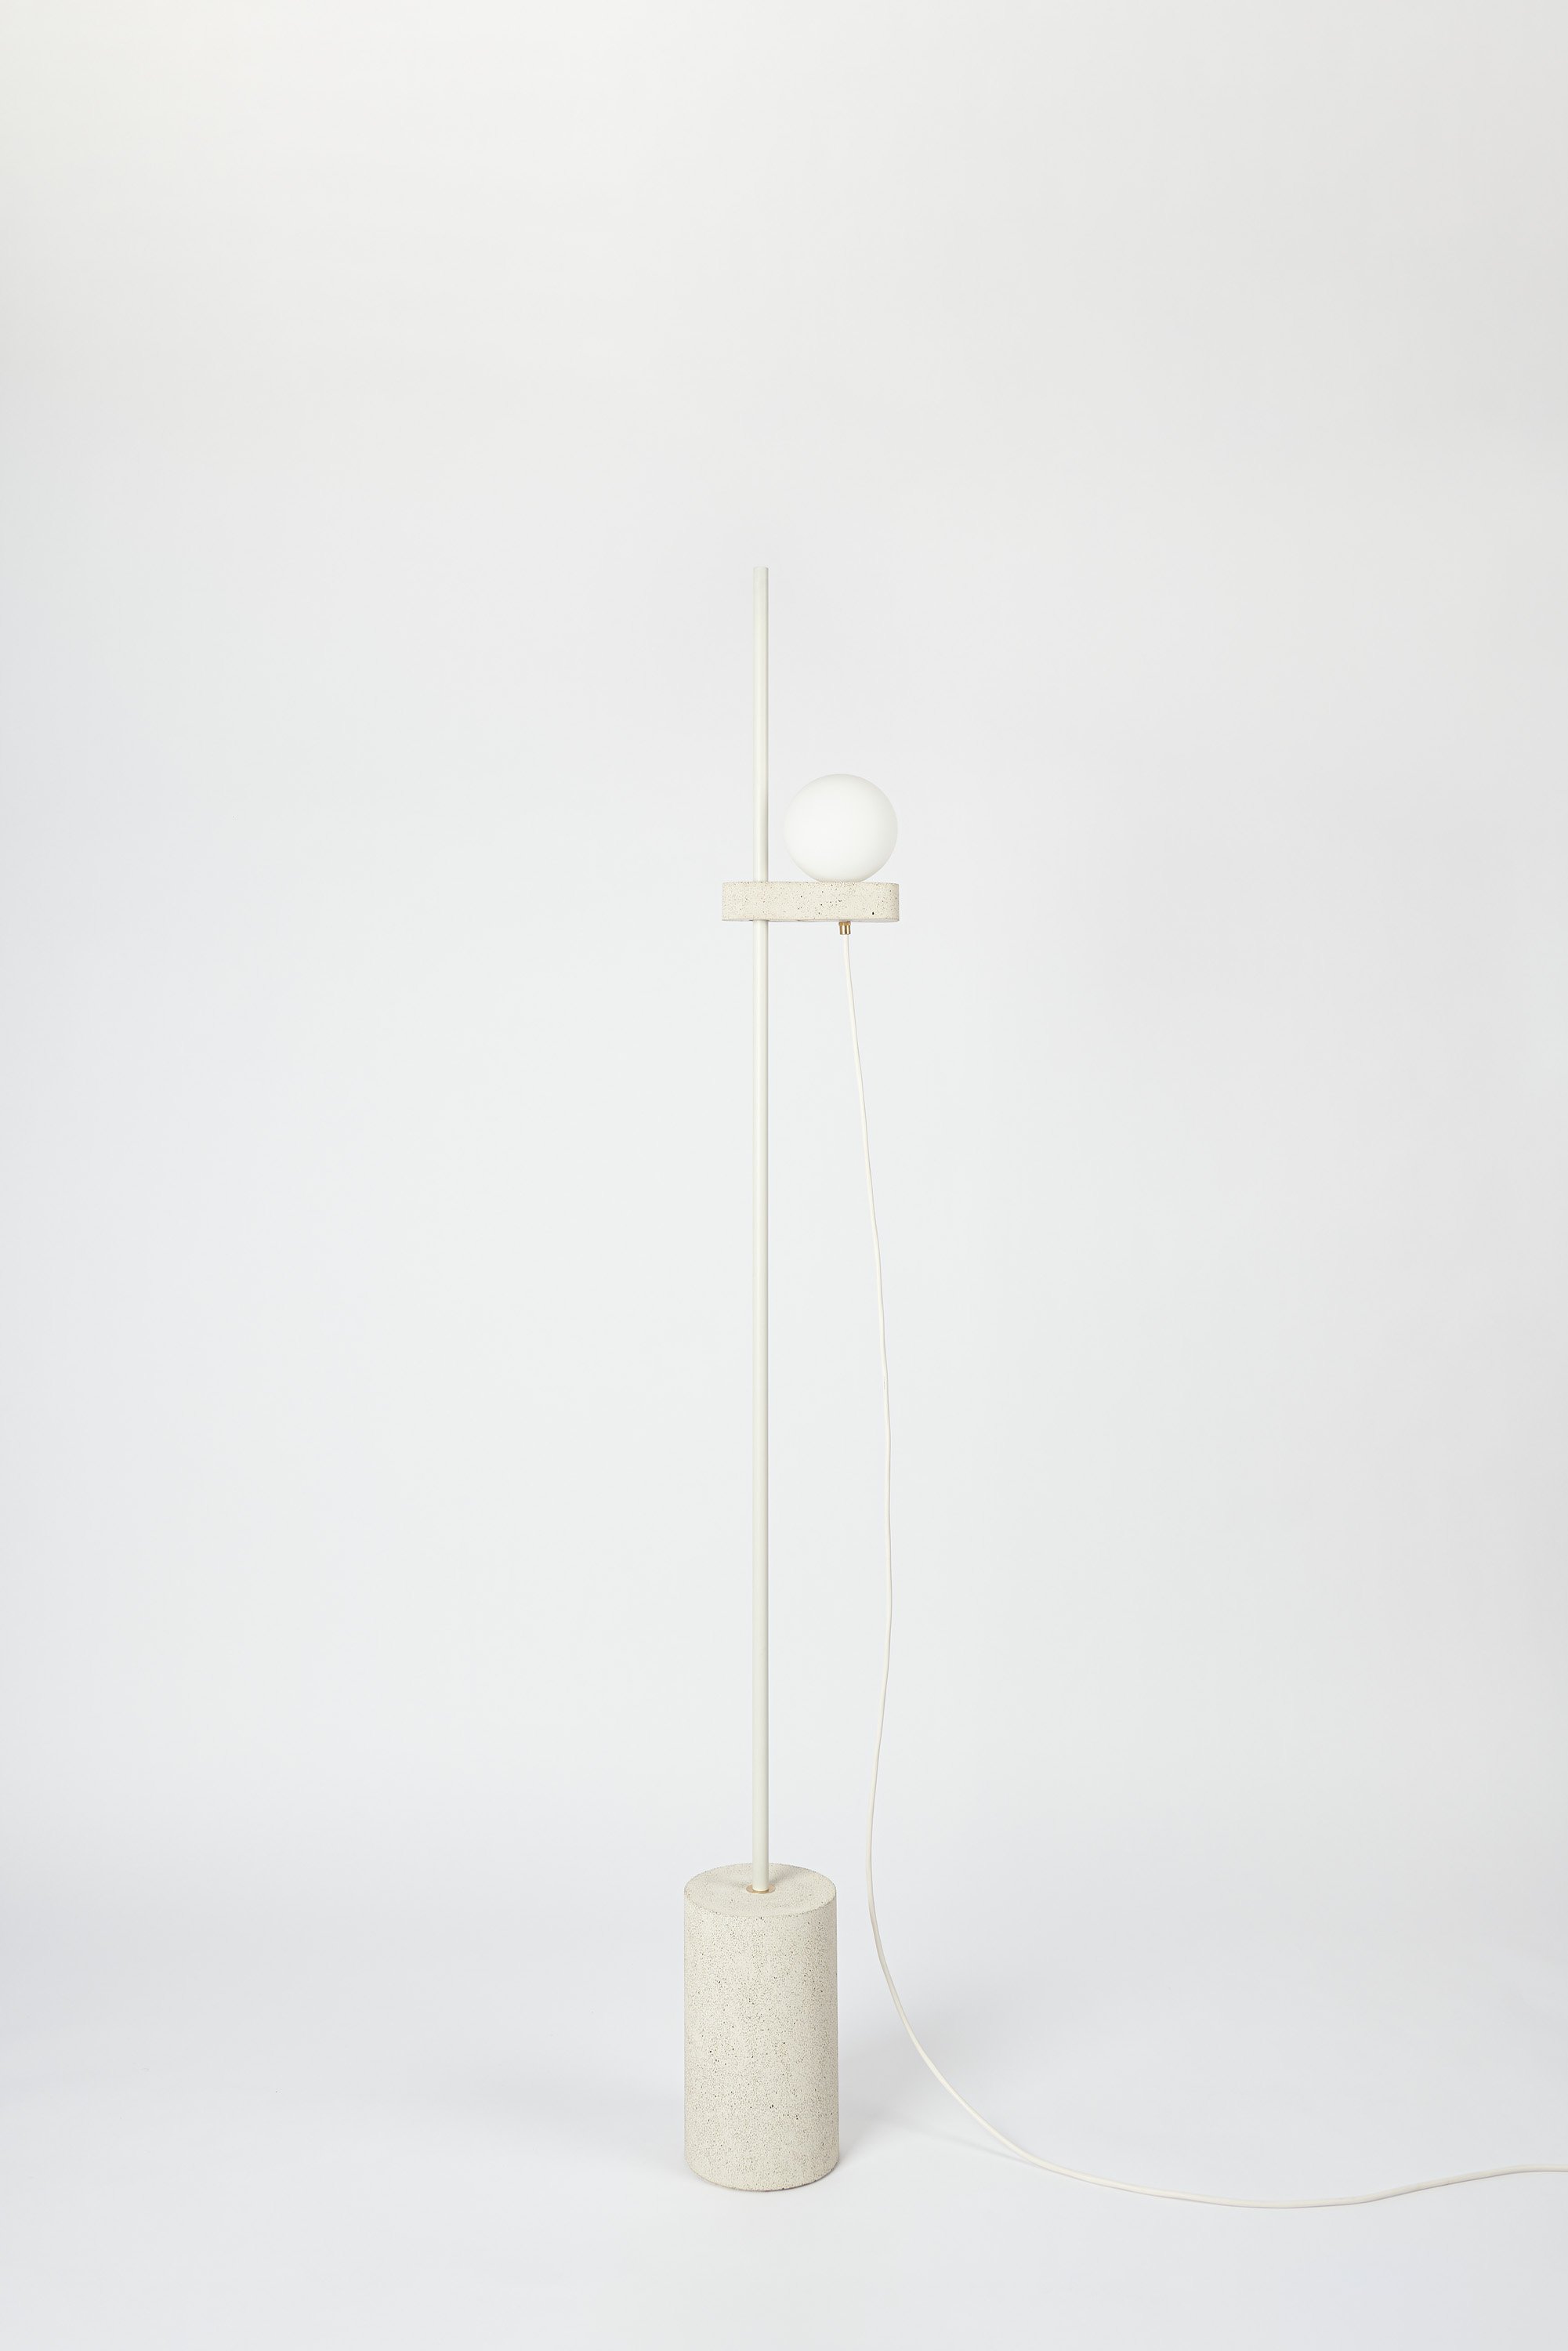 Lamp by Studio Clos